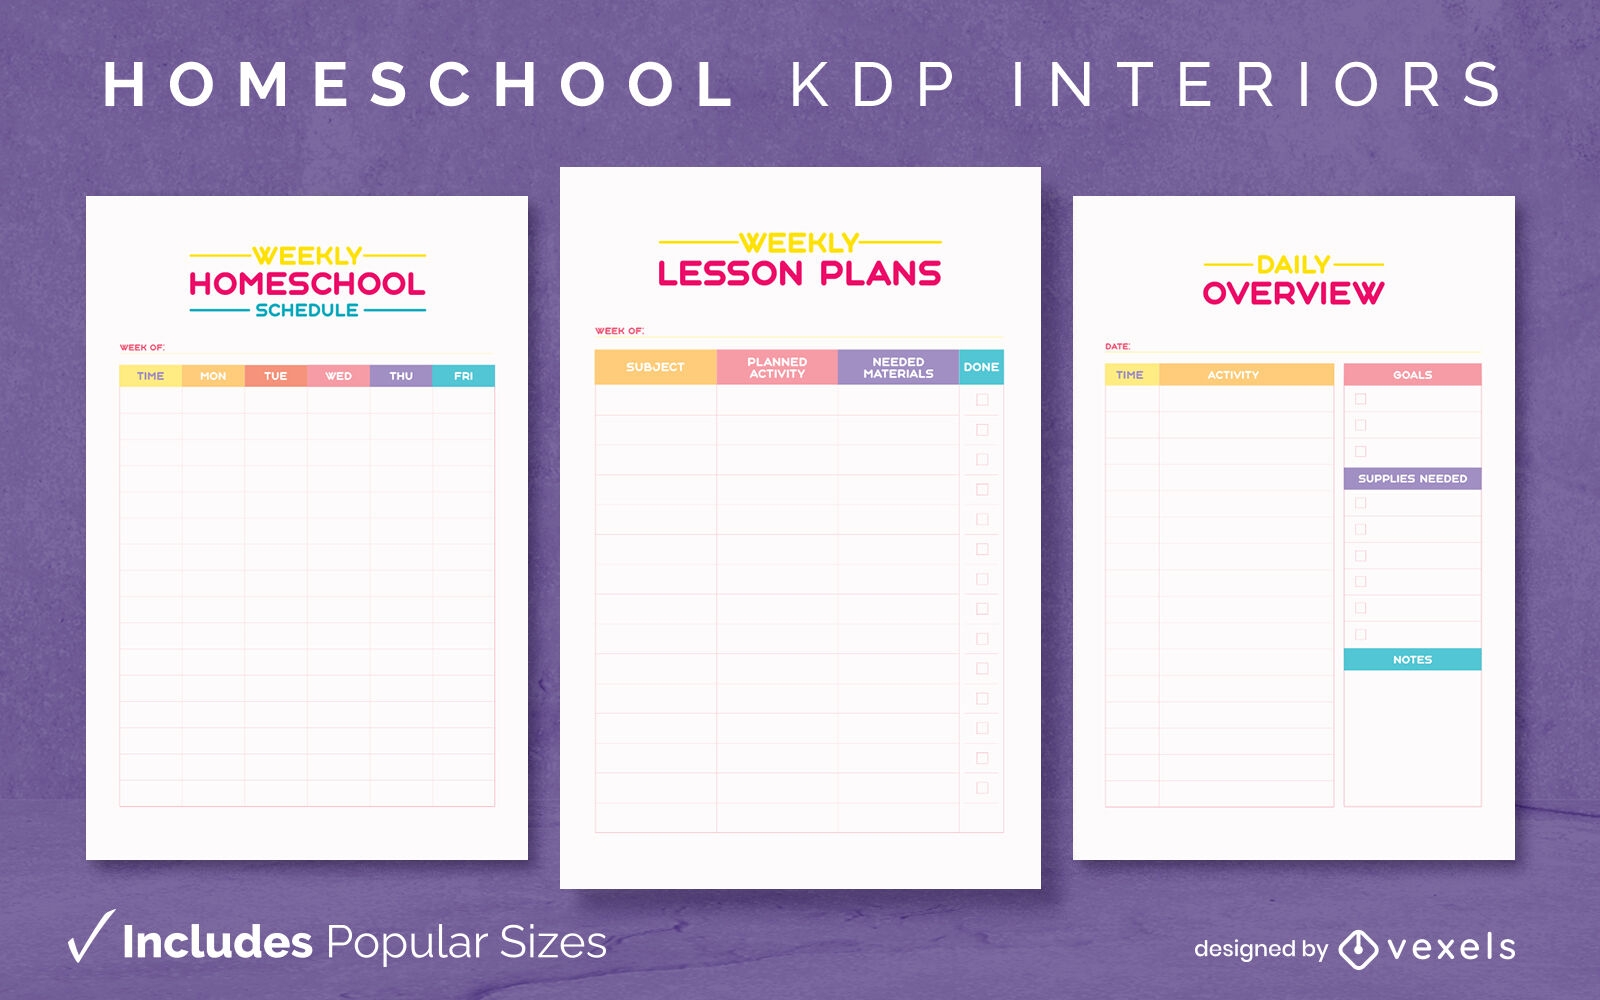 Homeschool kdp interior pages design